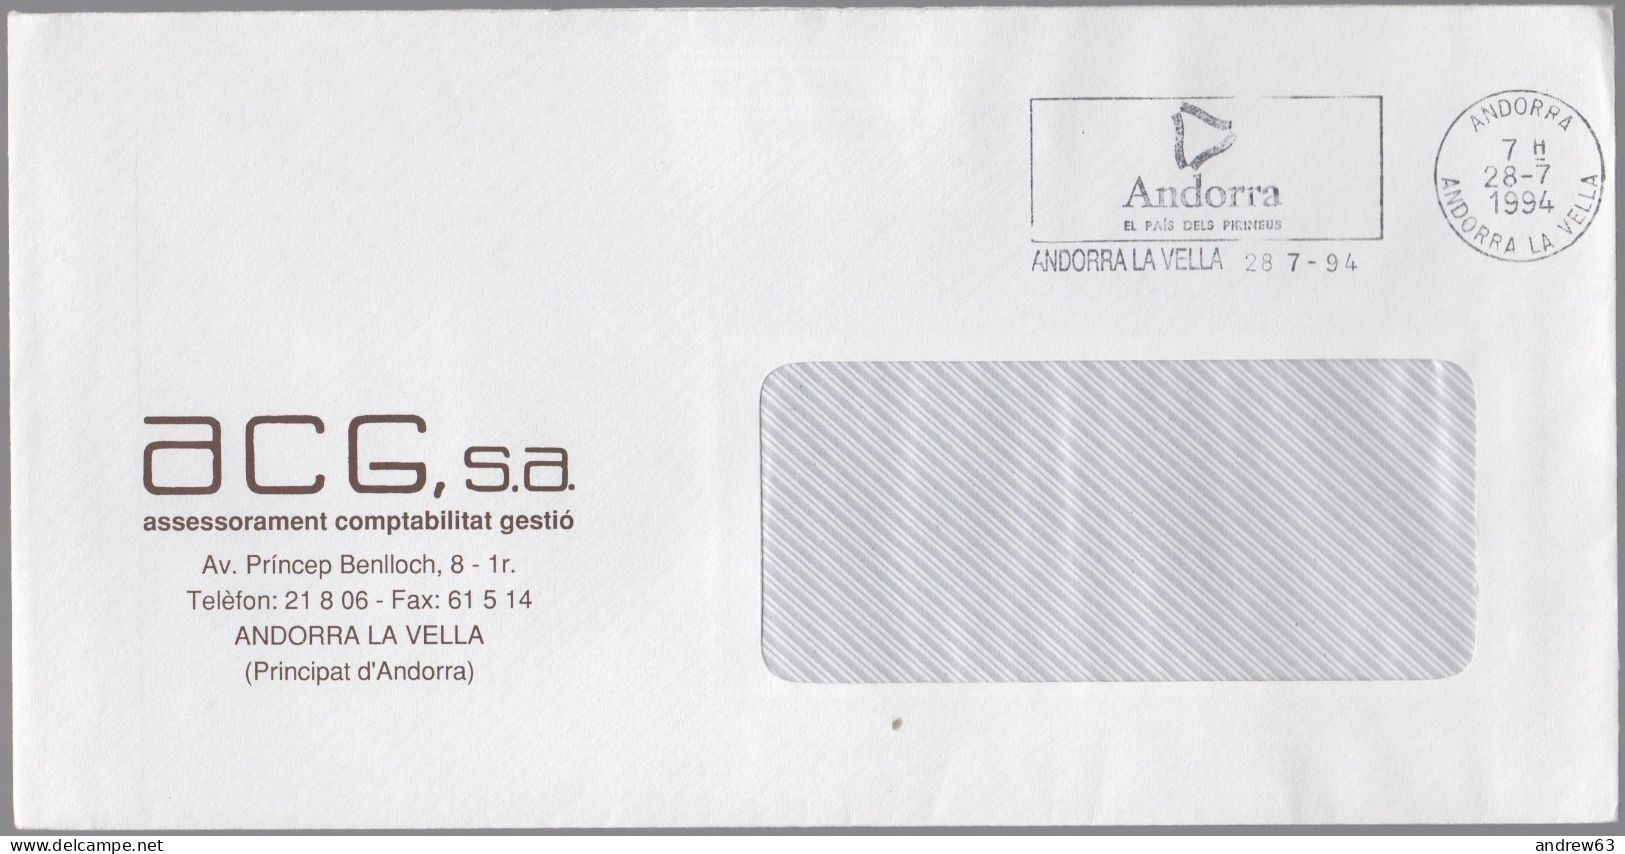 ANDORRA - ANDORRE - 1994 - Lettre En Franchise + Flamme - ACG, S.a. - Viaggiata Da Andorra La Vella - Lettres & Documents